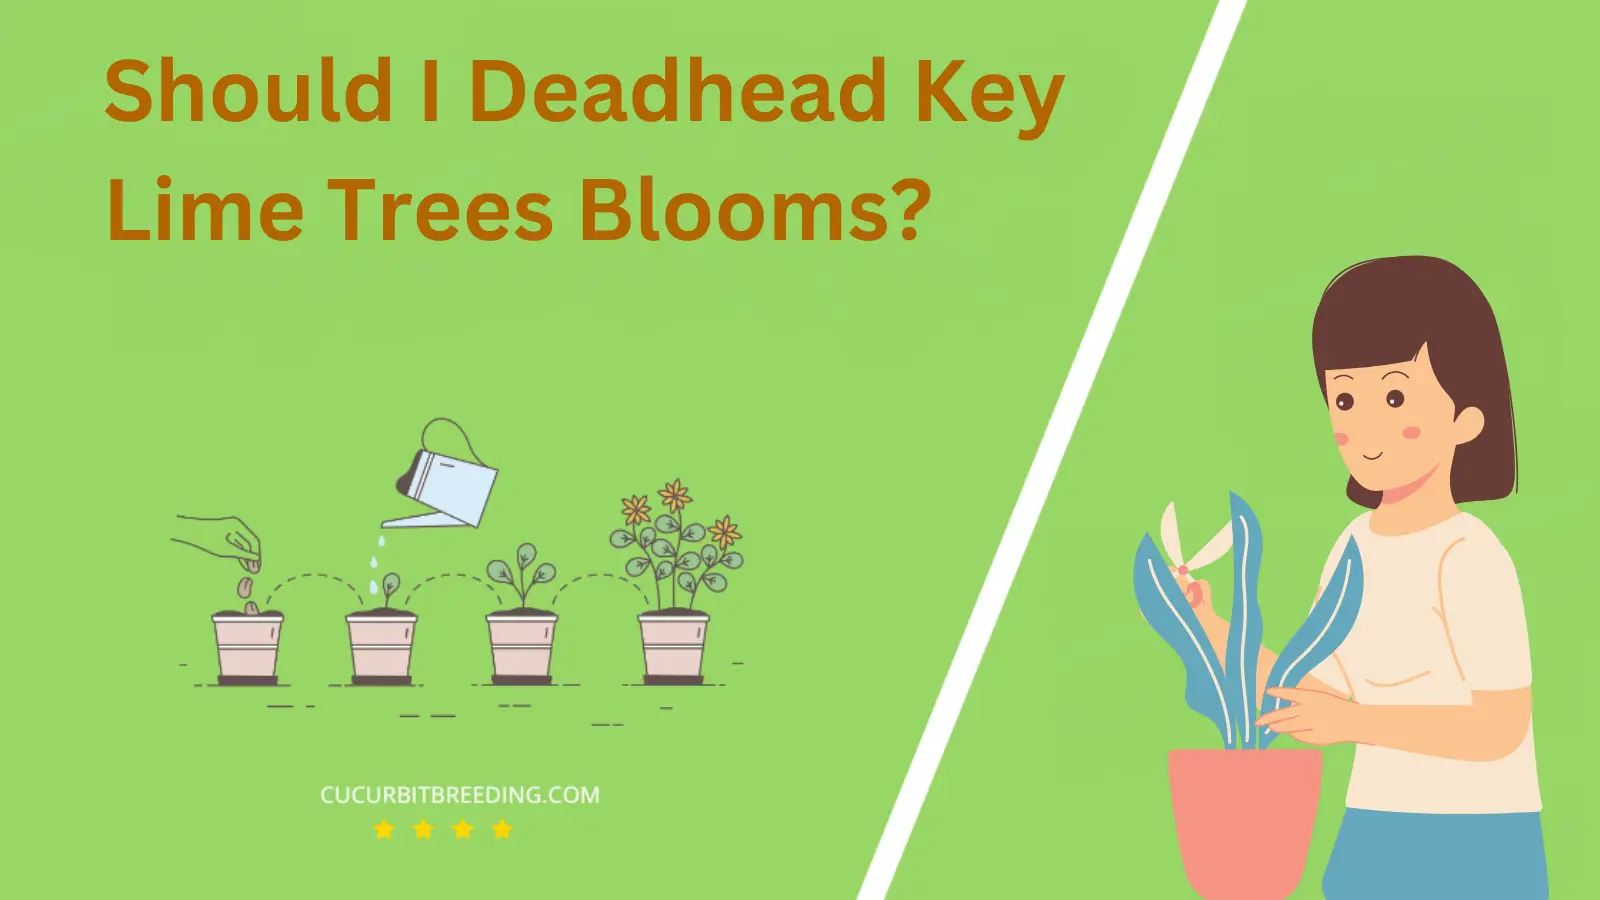 Should I Deadhead Key Lime Trees Blooms?